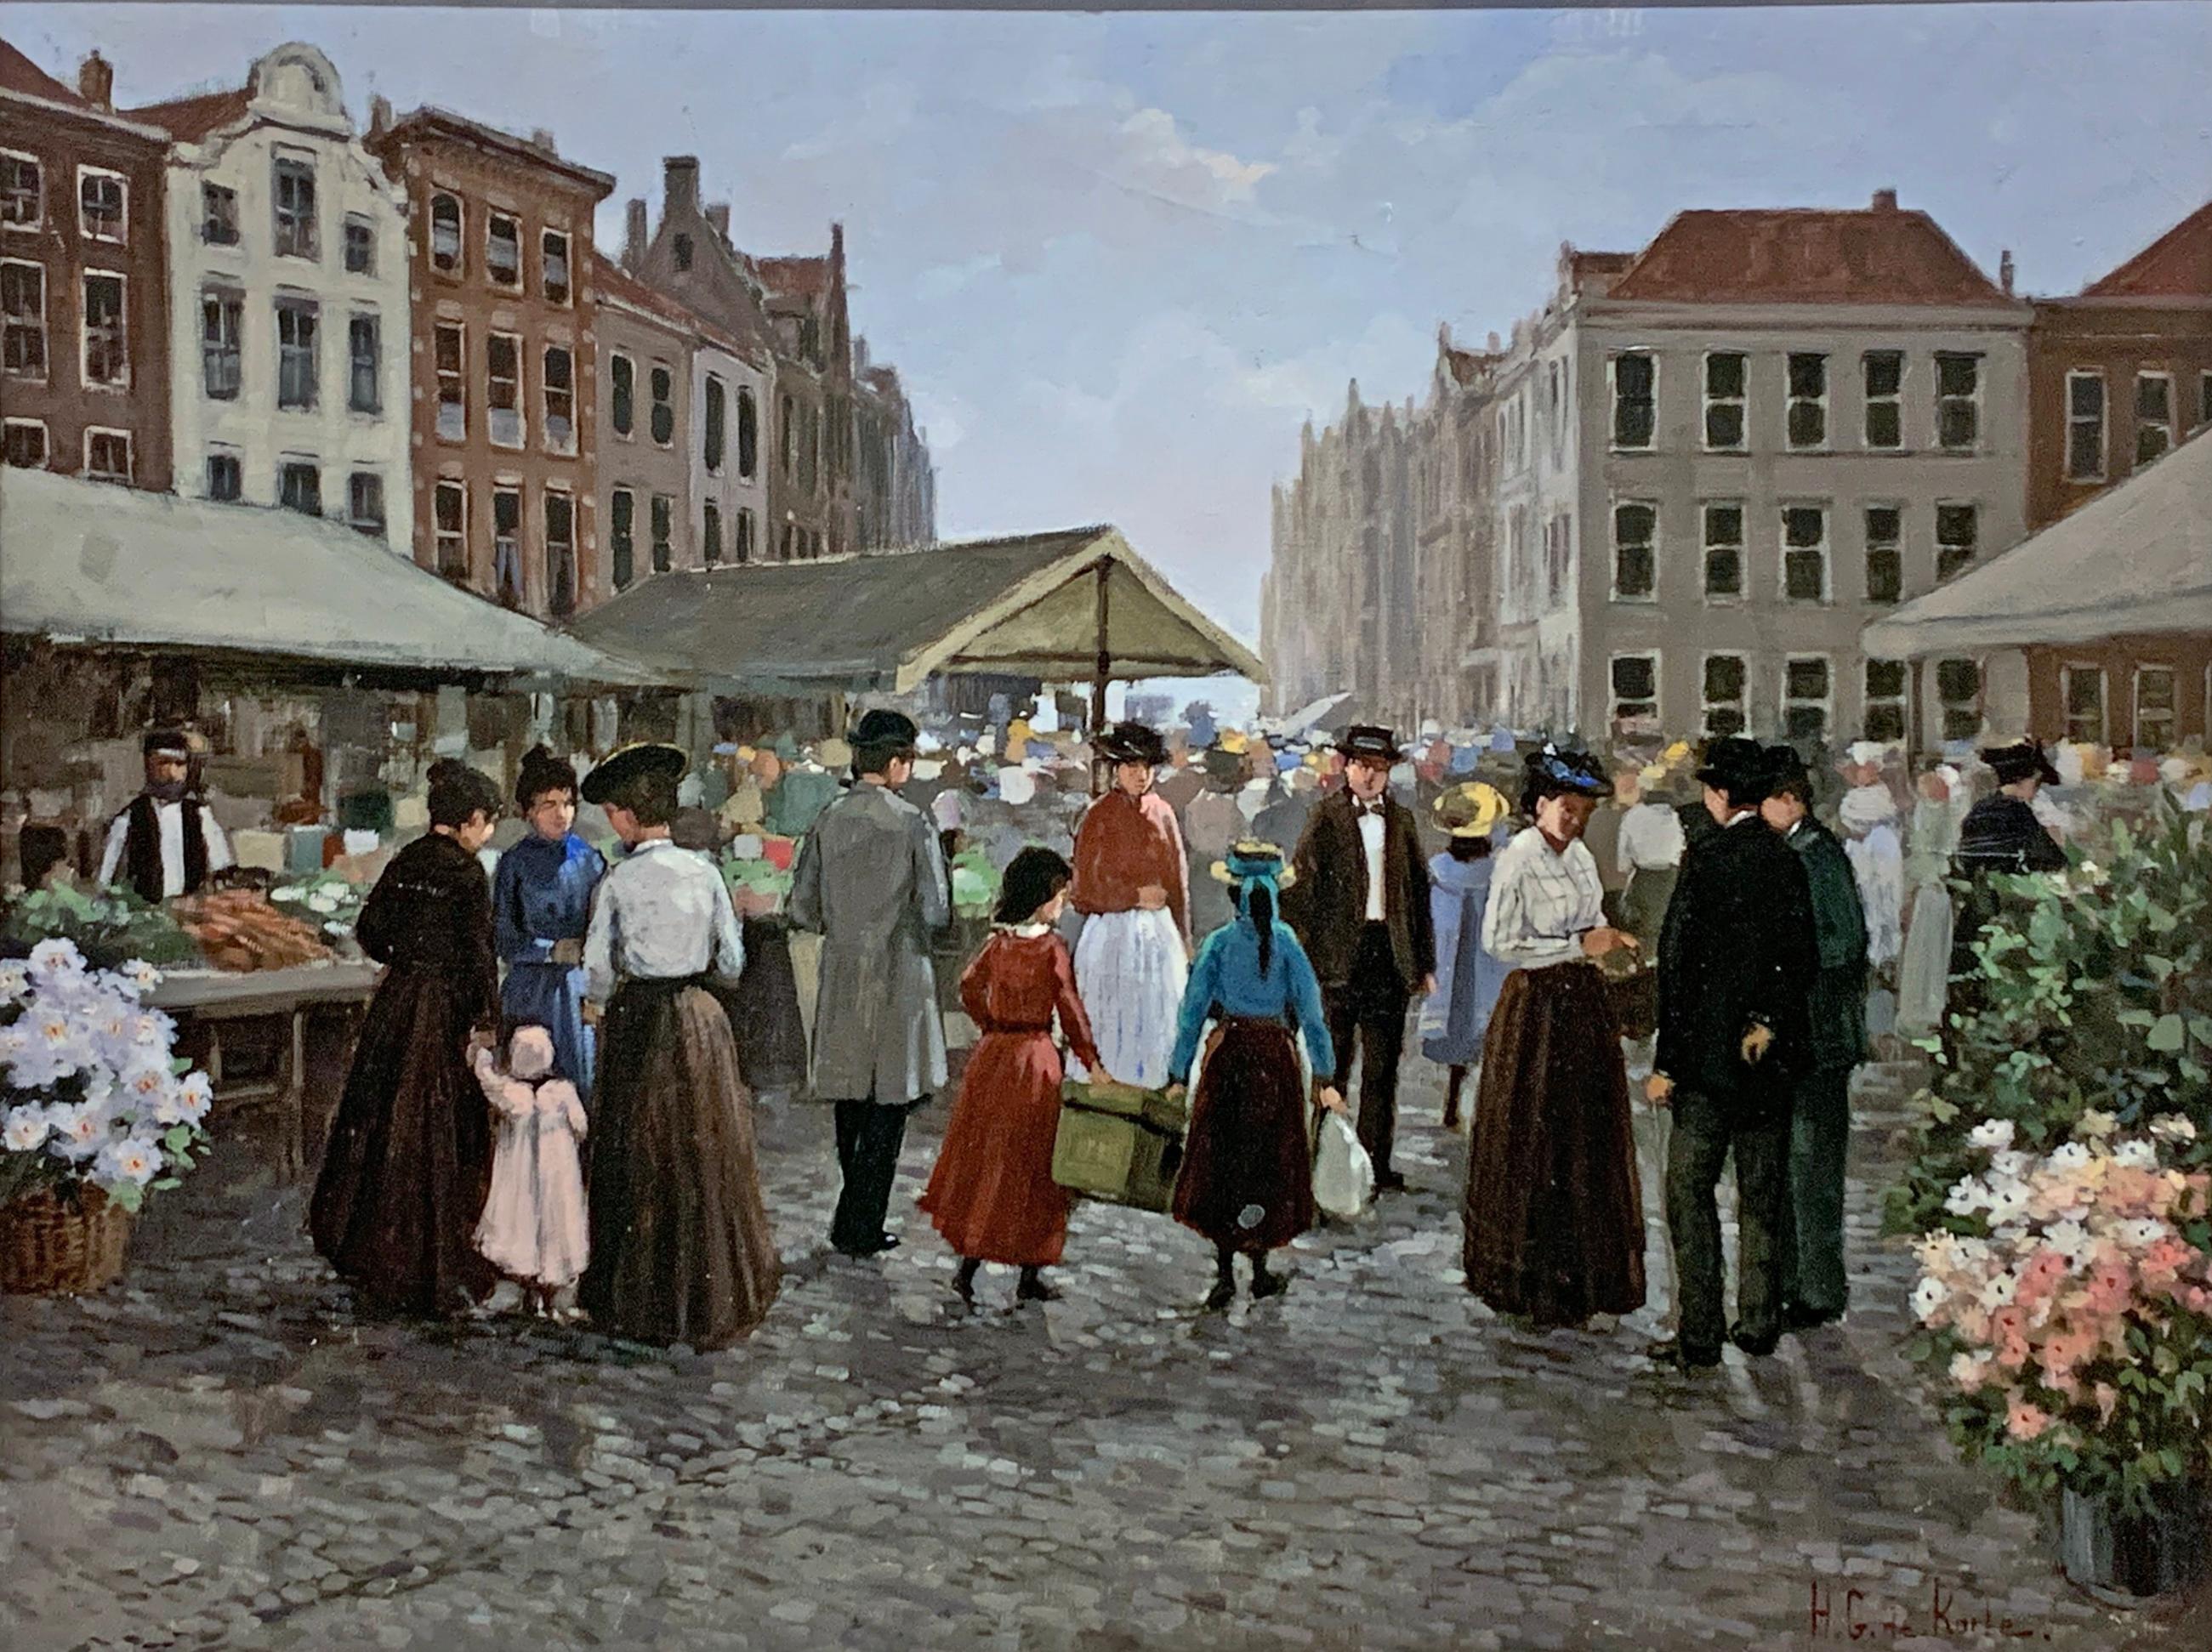 "Market", Henni de Korte, 28x36 in, Oil on Canvas, Classical Impressionism